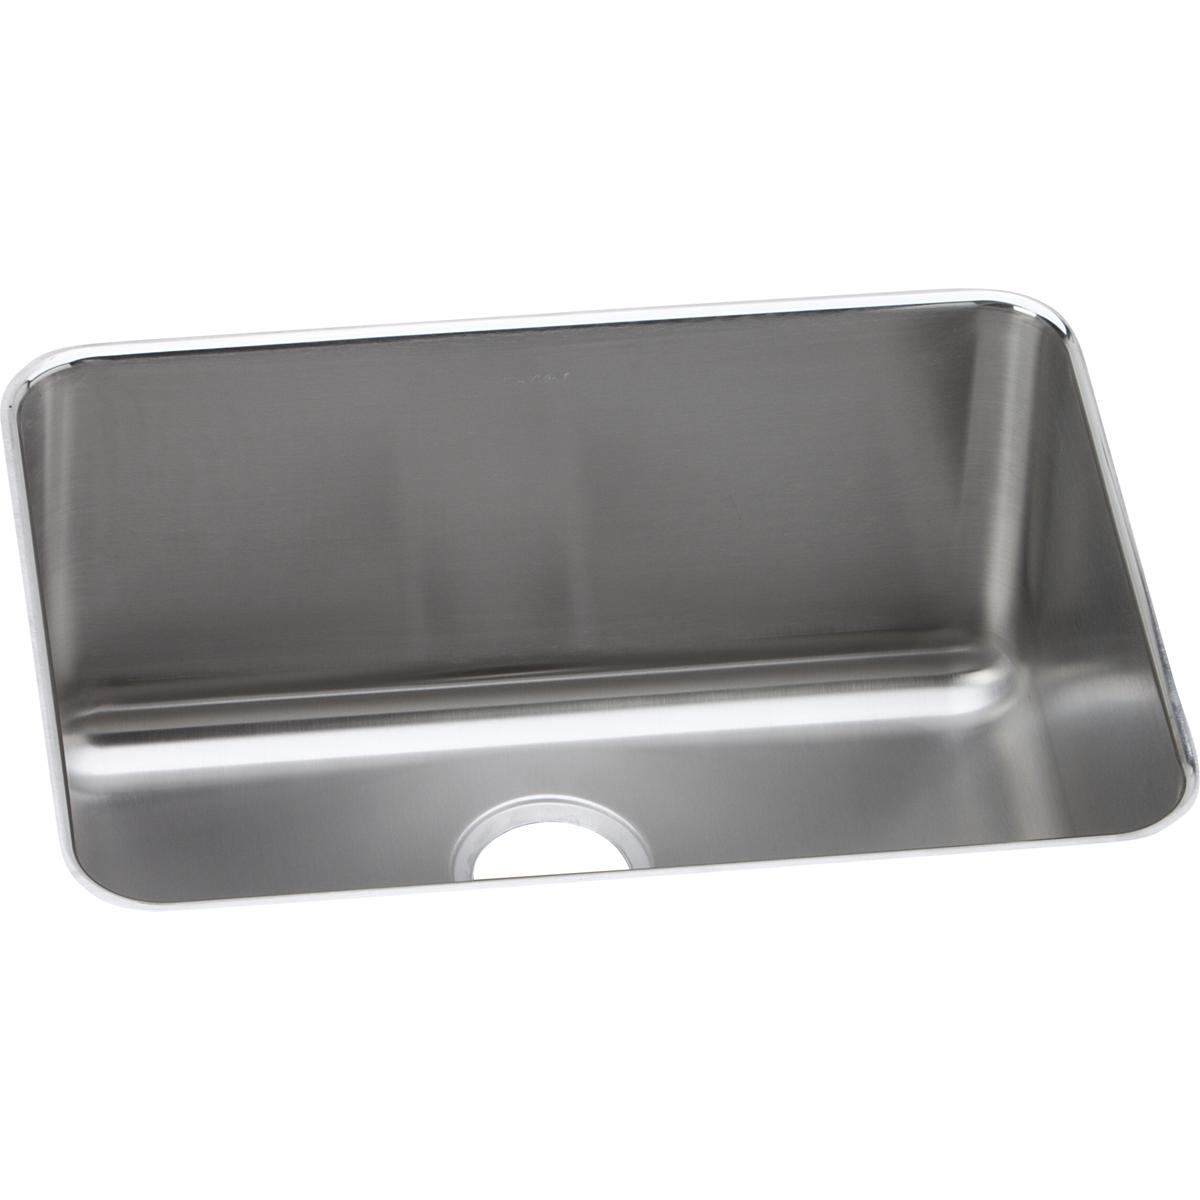 Elkay Lustertone Classic Stainless Steel 25-1/2" x 19-1/4" x 12" Single Bowl Undermount Sink